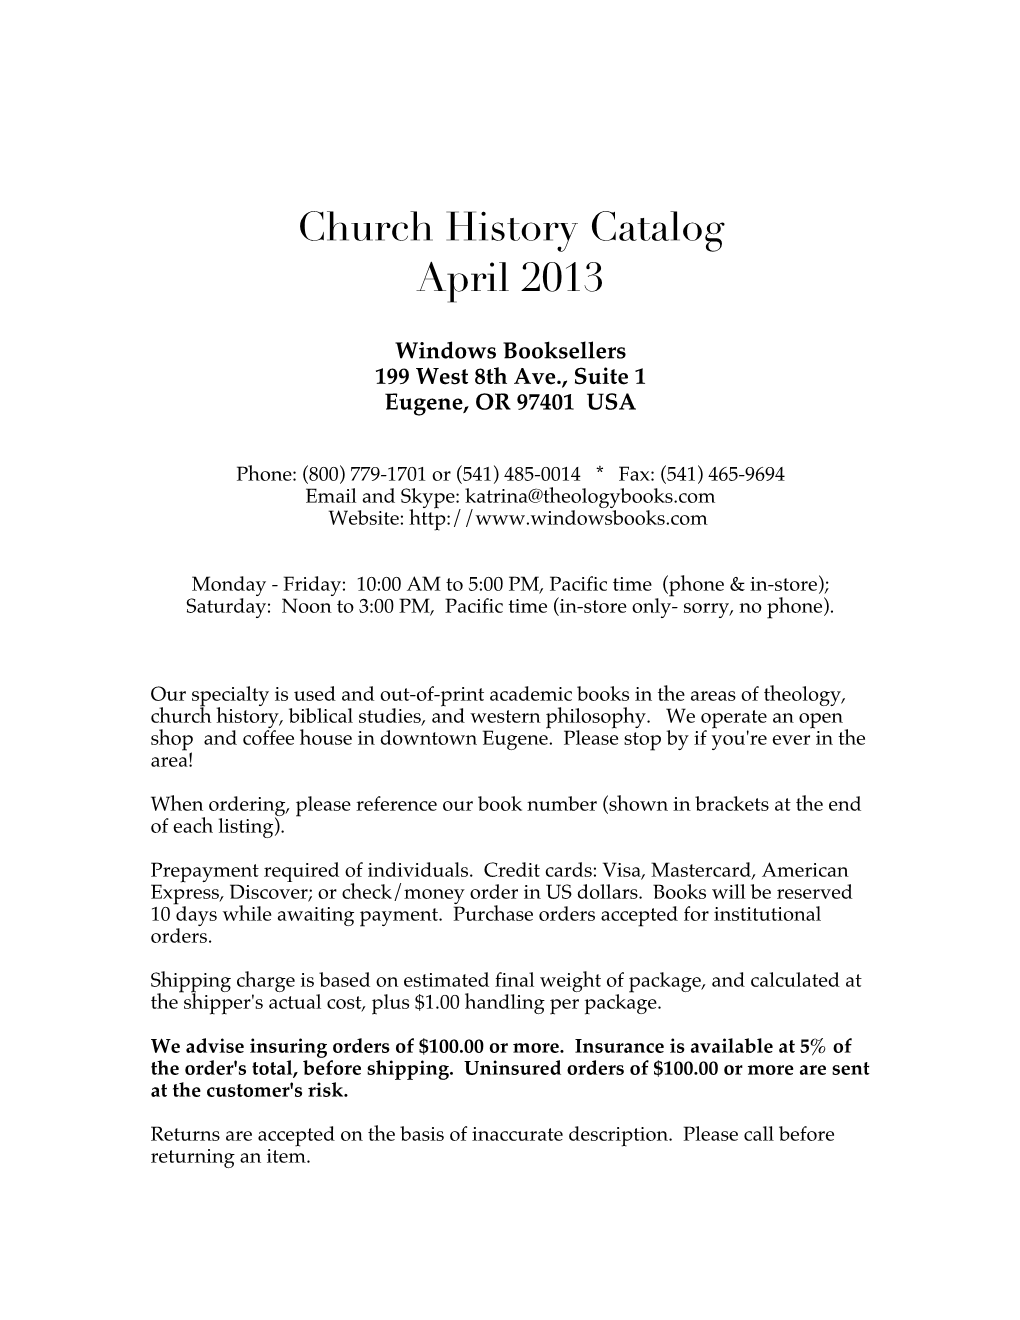 Church History April